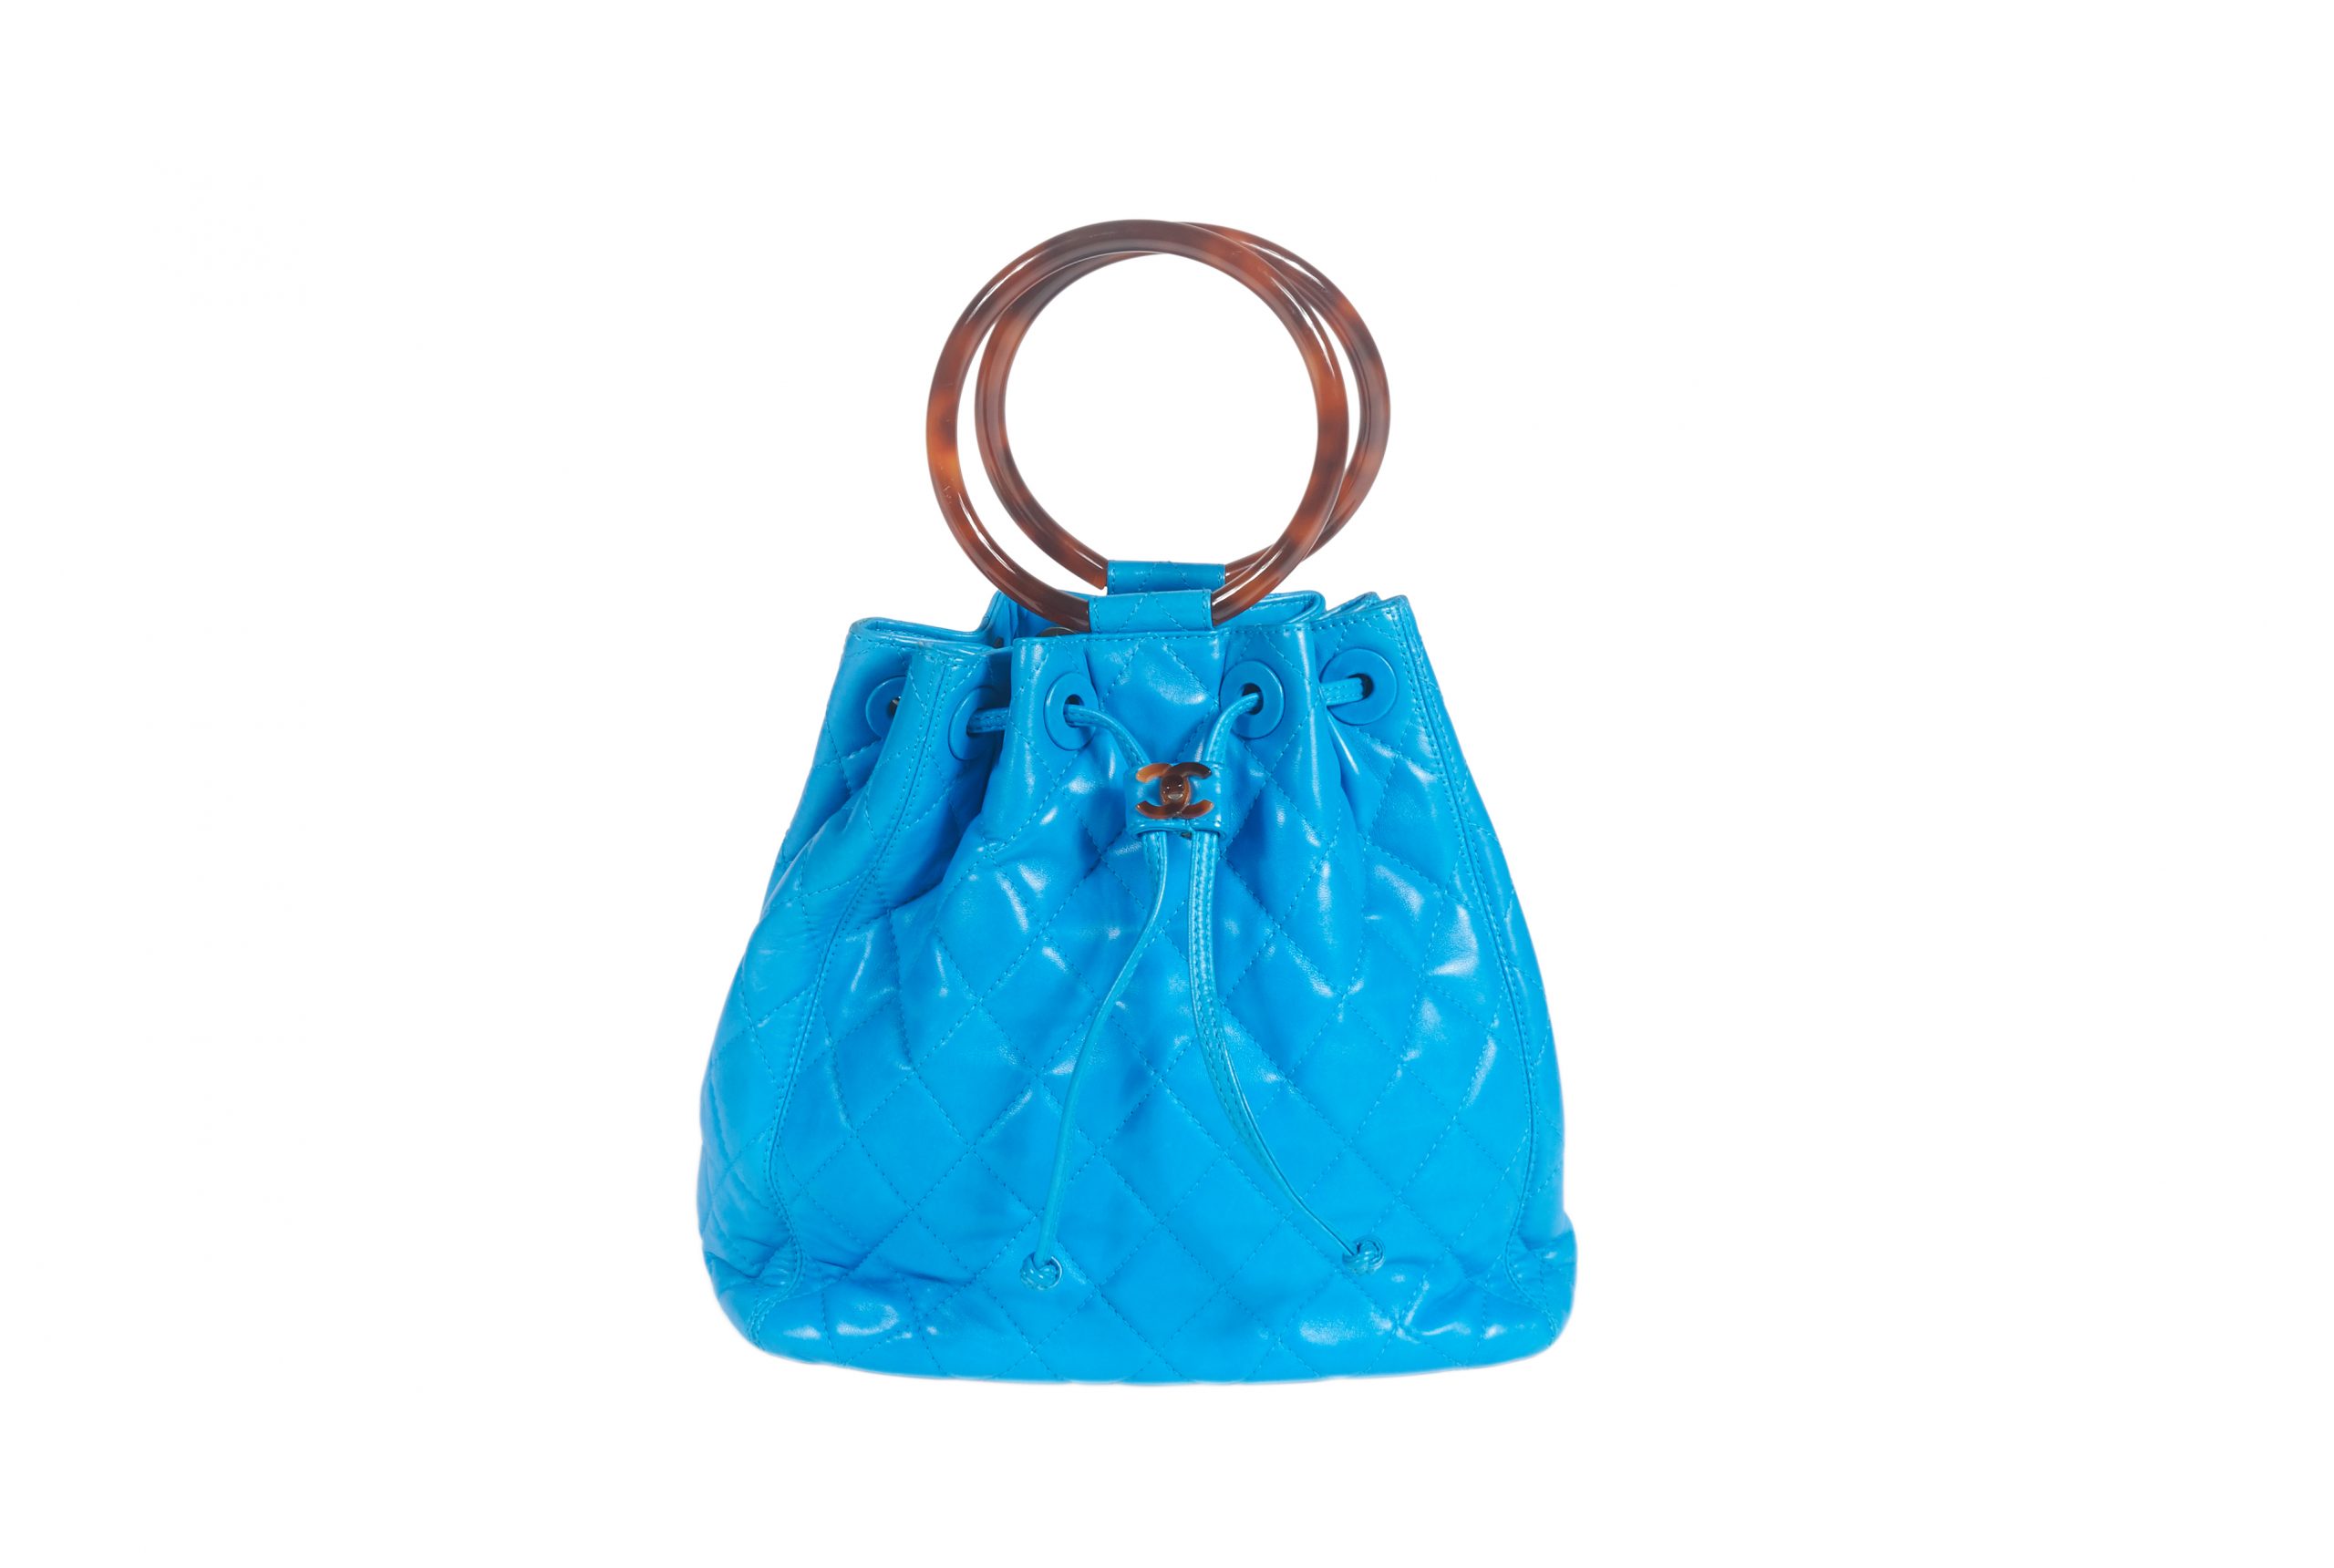 Chanel Tortoise Ring Handle Bag - Janet Mandell